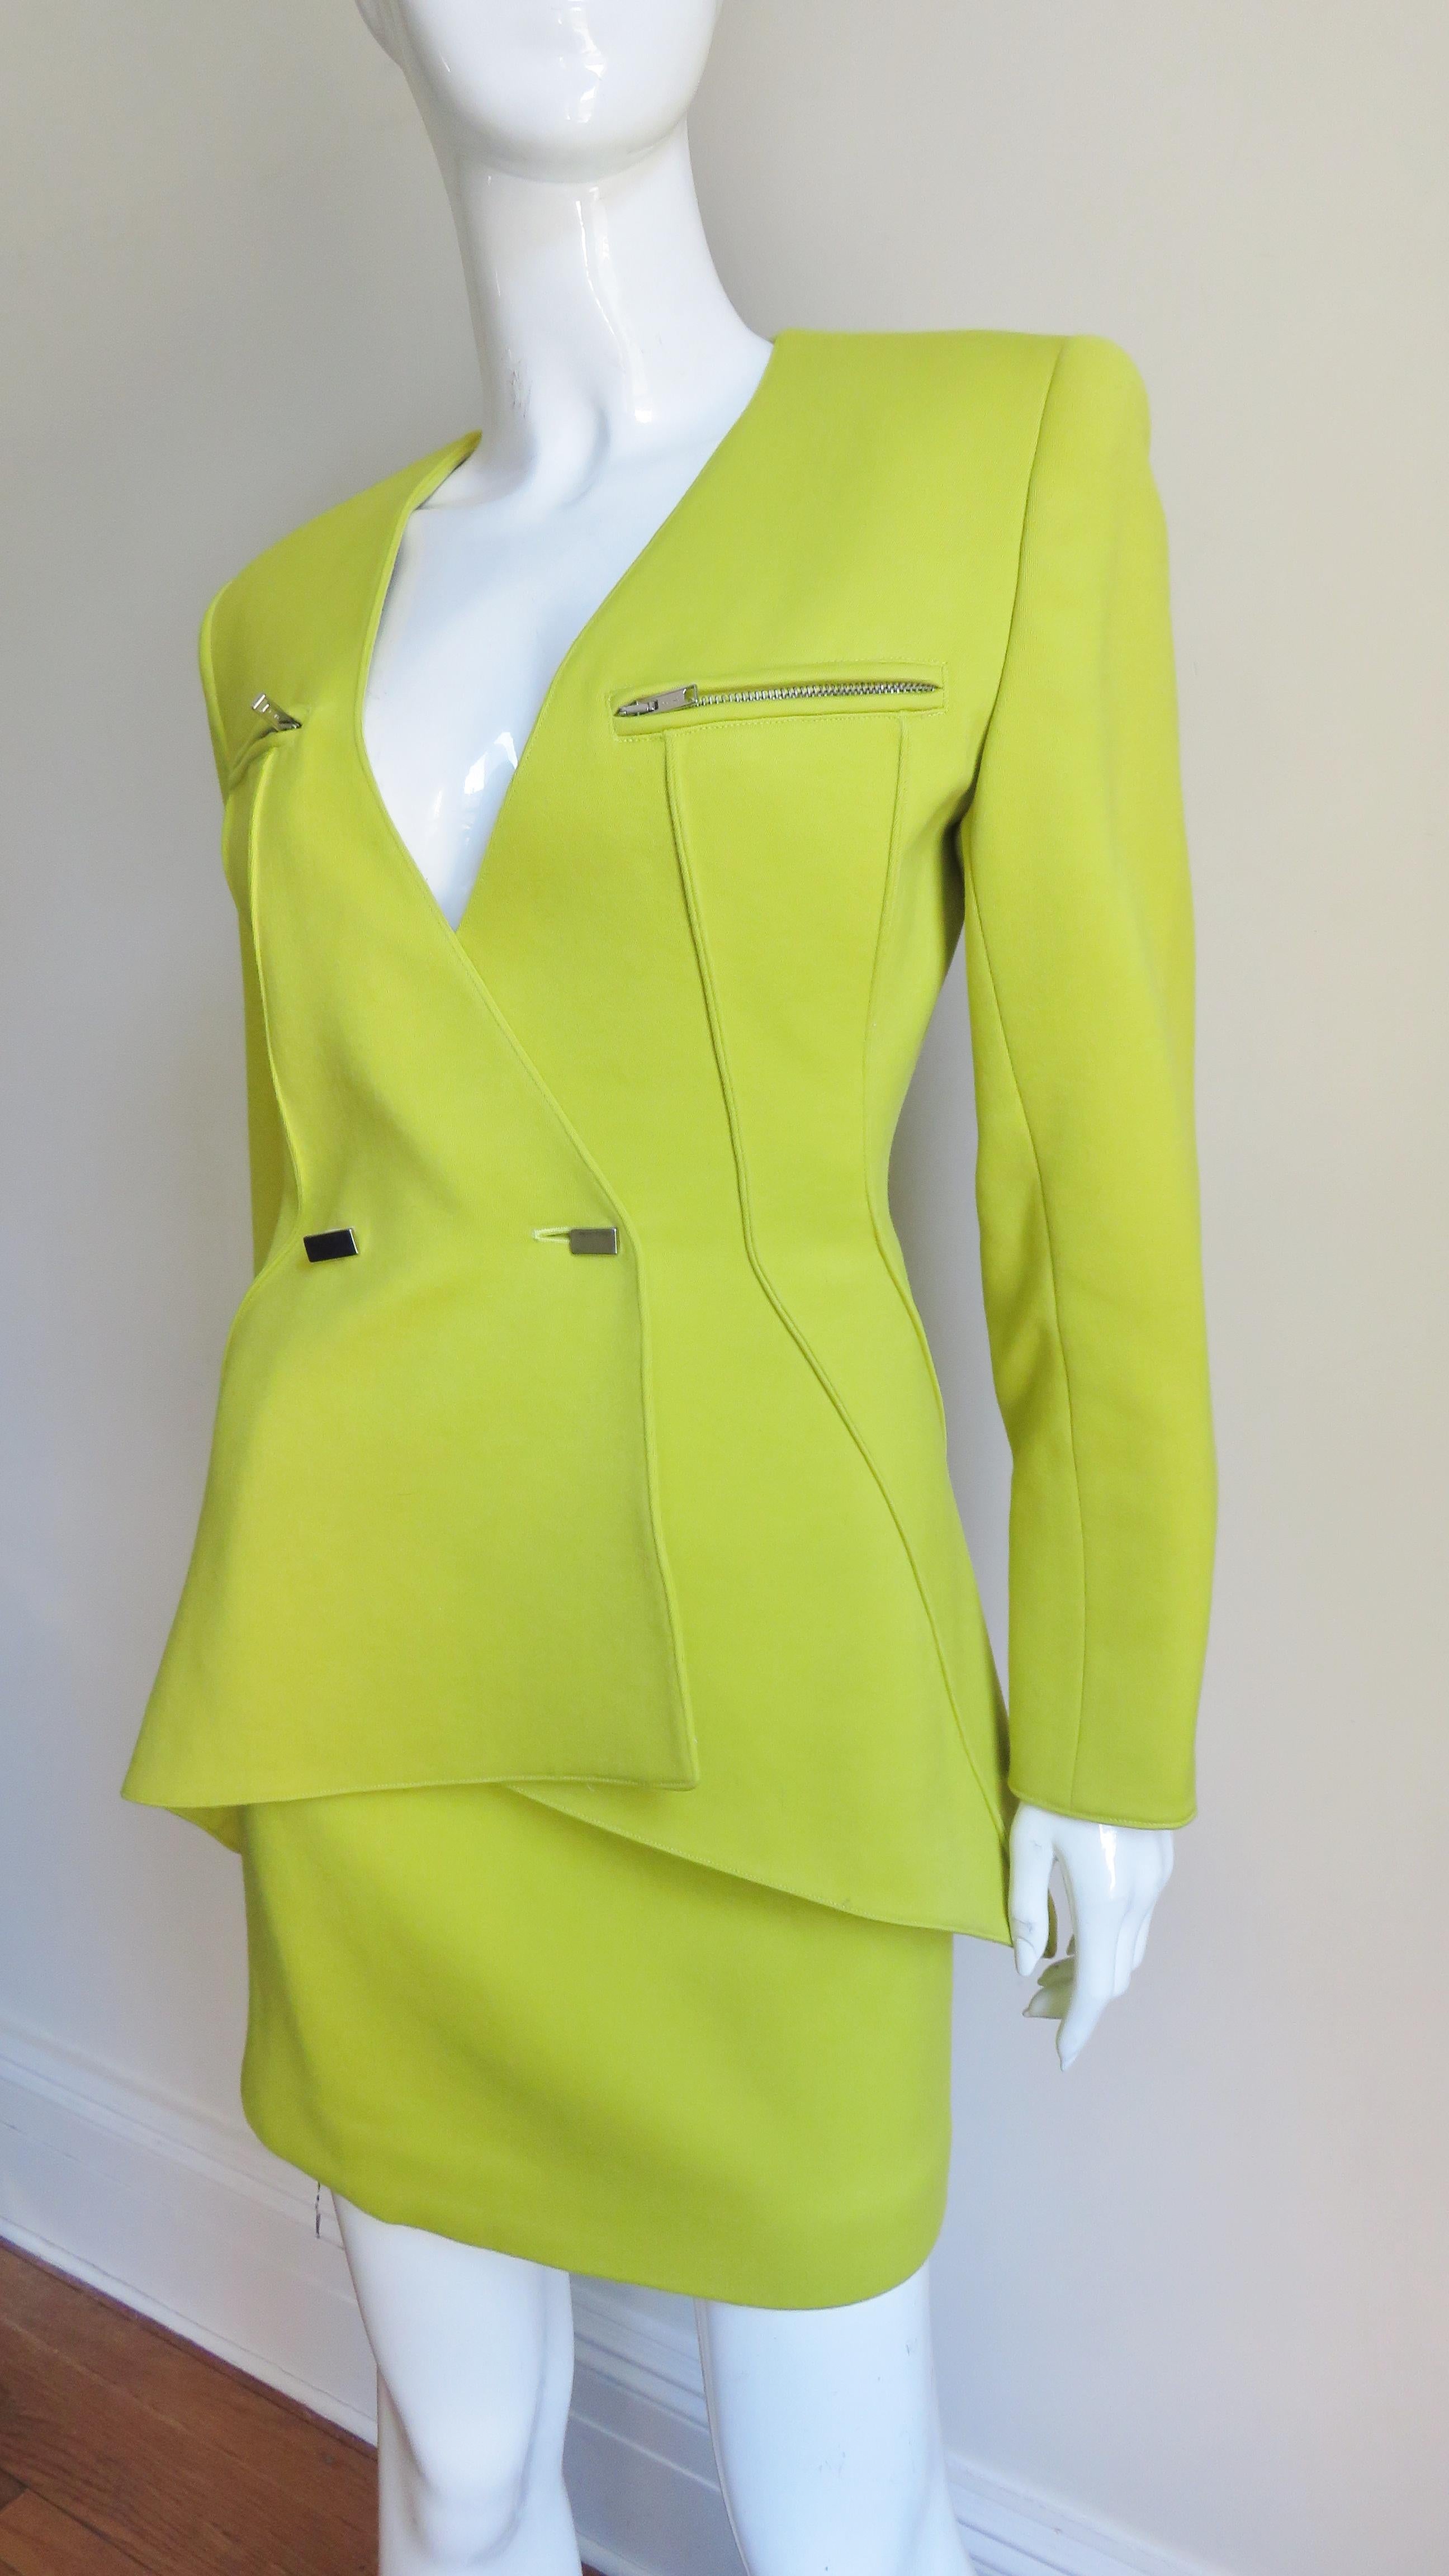 futuristic suit jacket